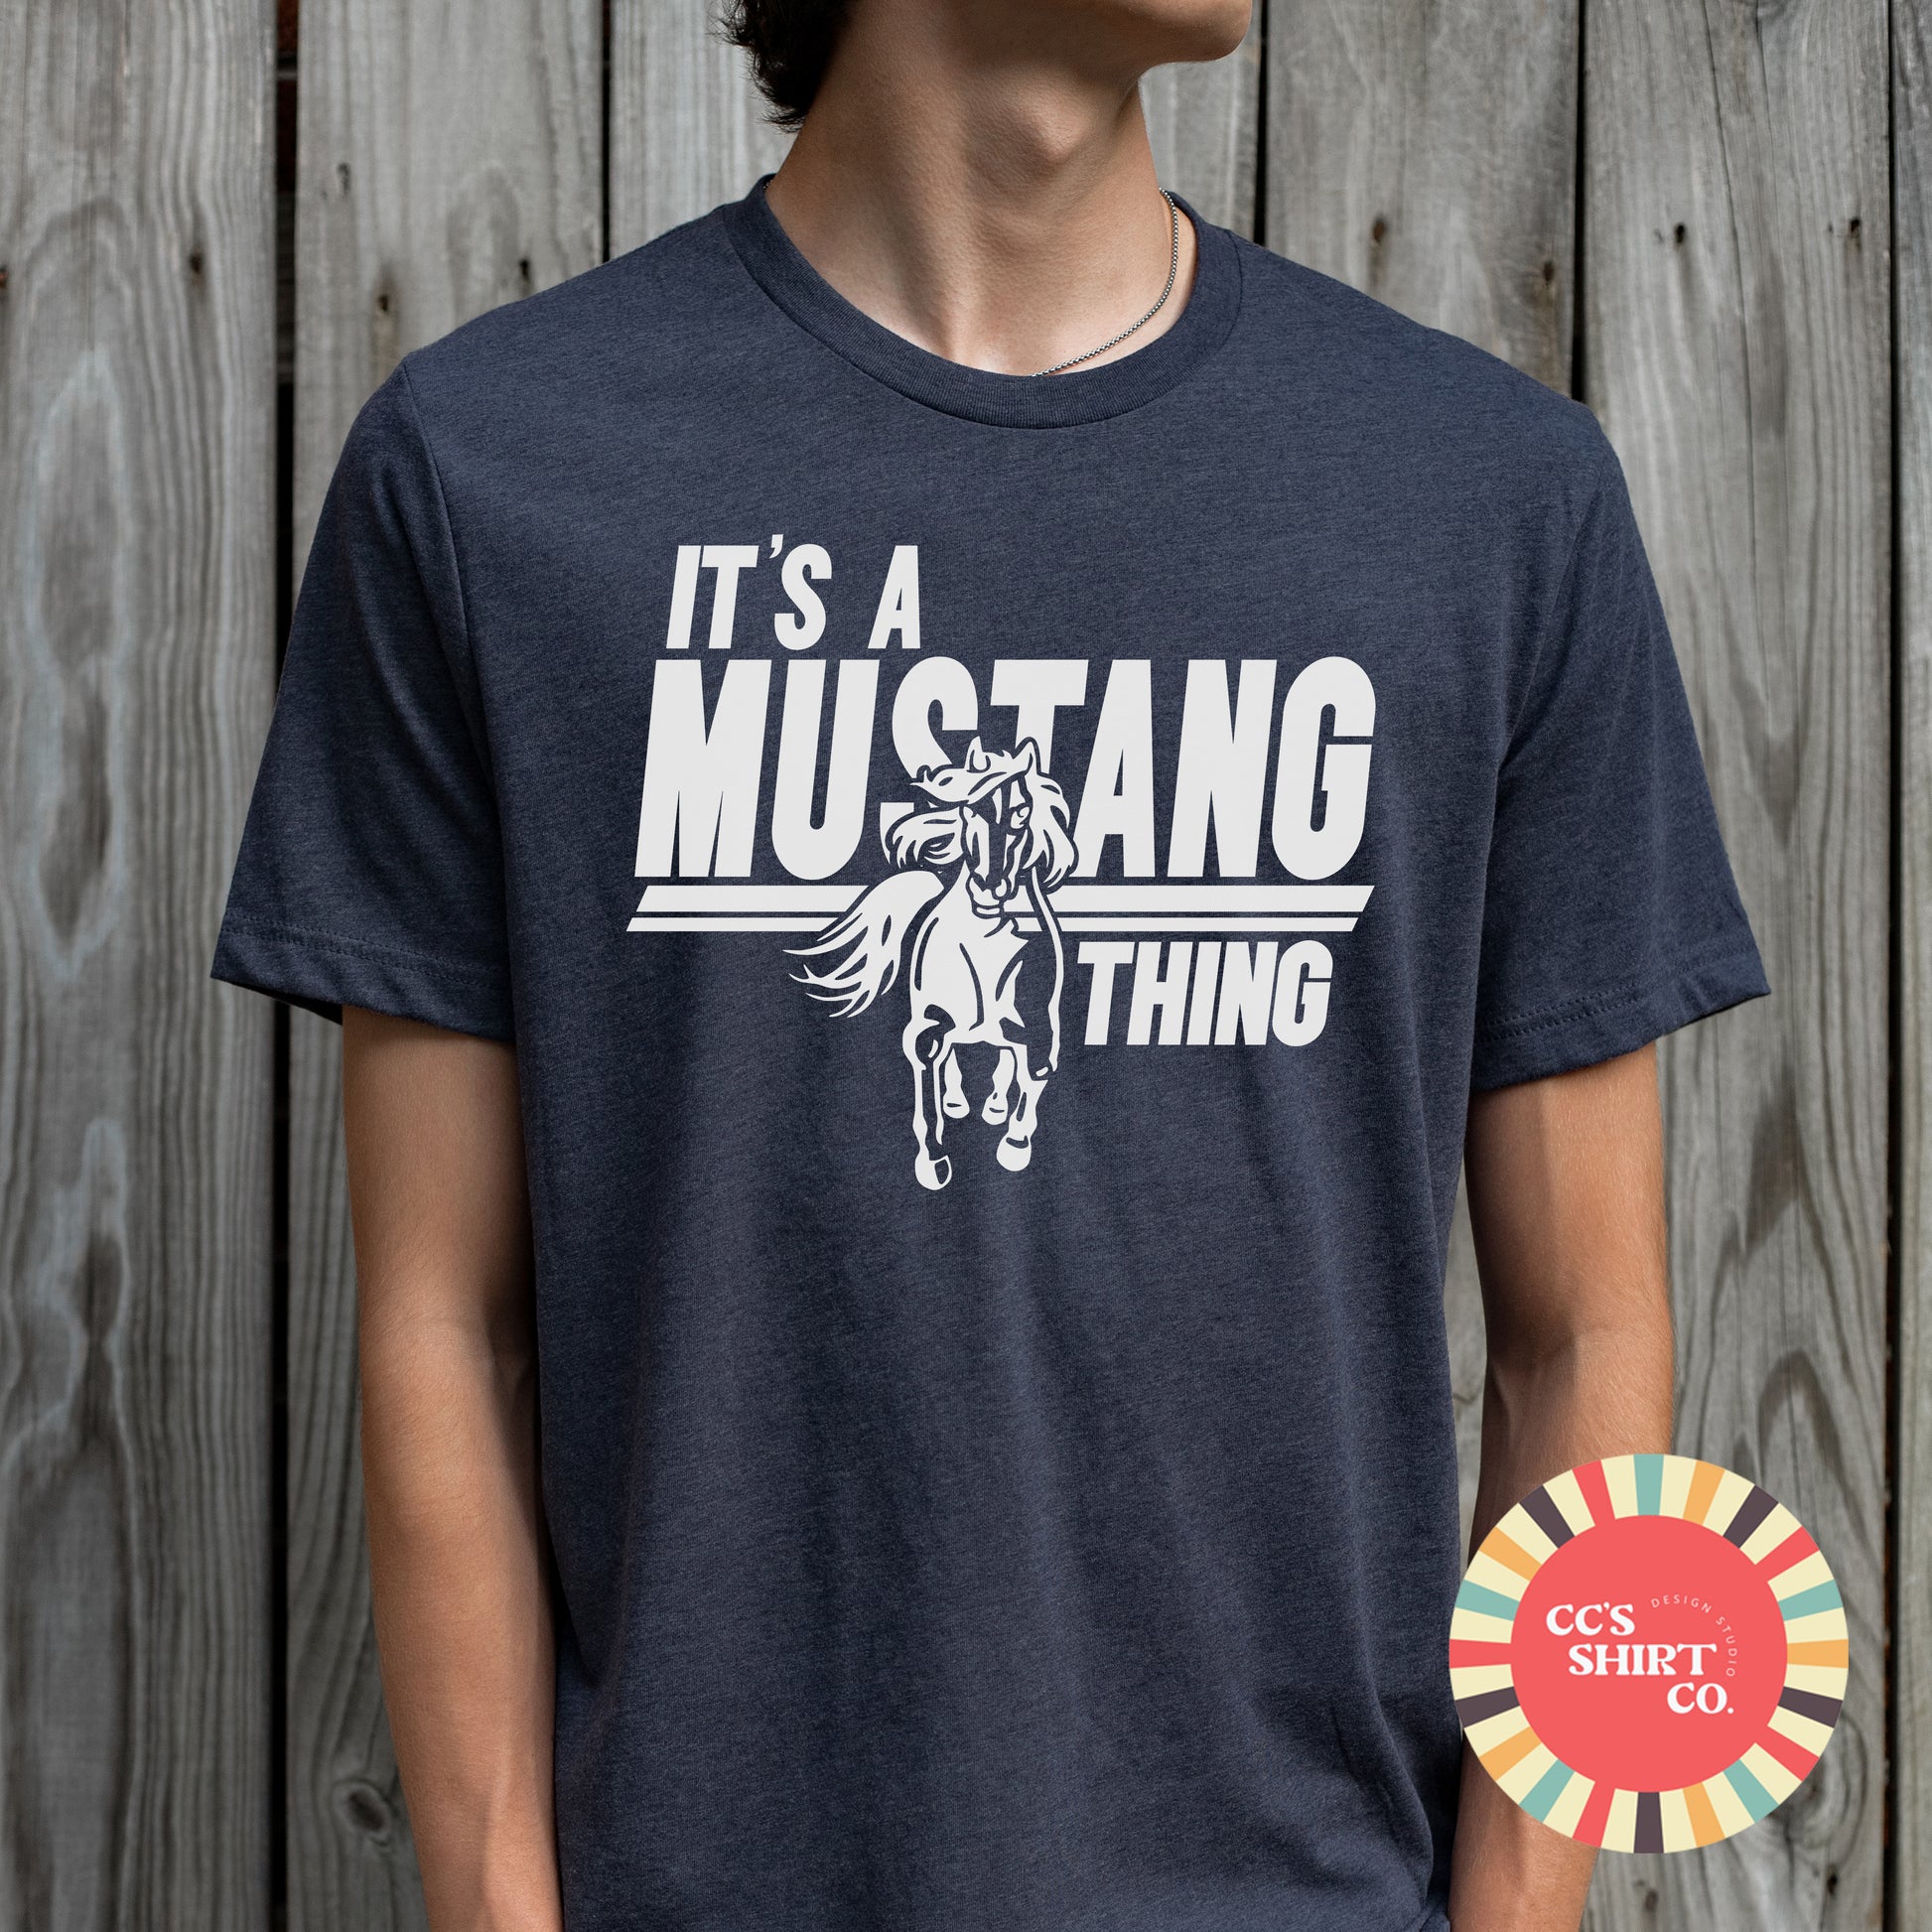 Mustang Spirit A Tee Thing It\'s – CC\'s Co Shirt